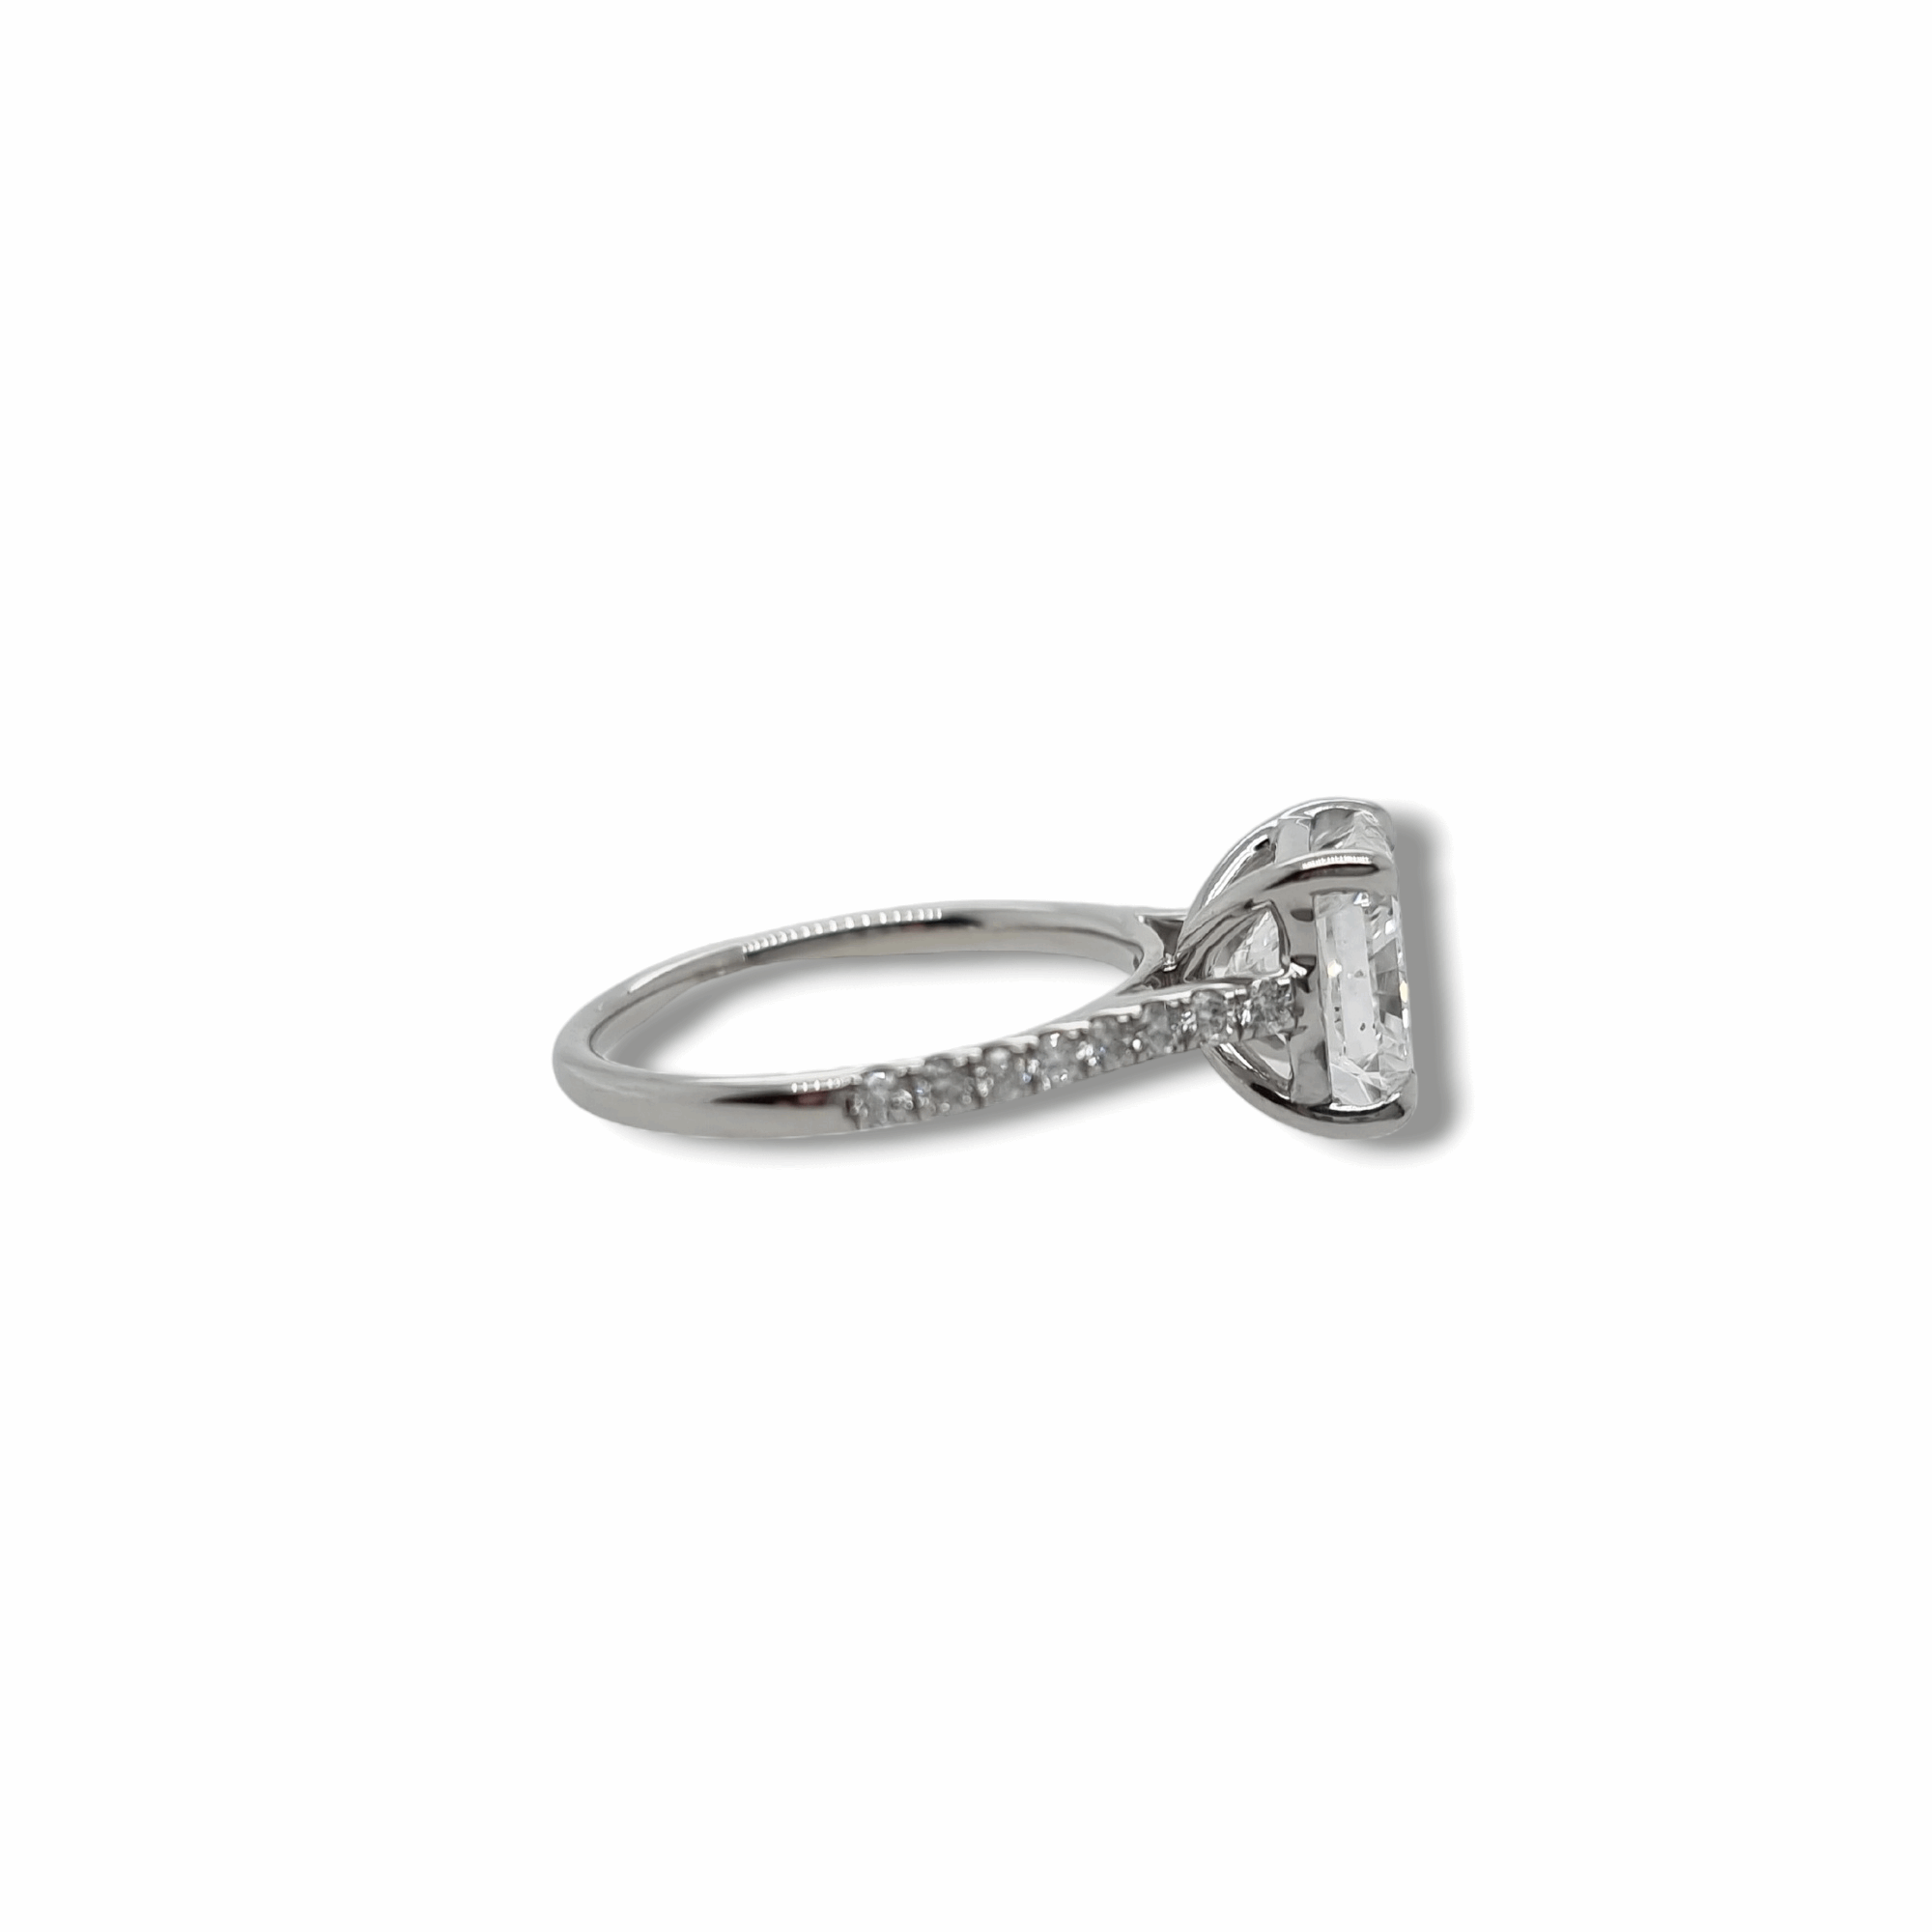 3.03ct Radiant Cut Diamond Ring